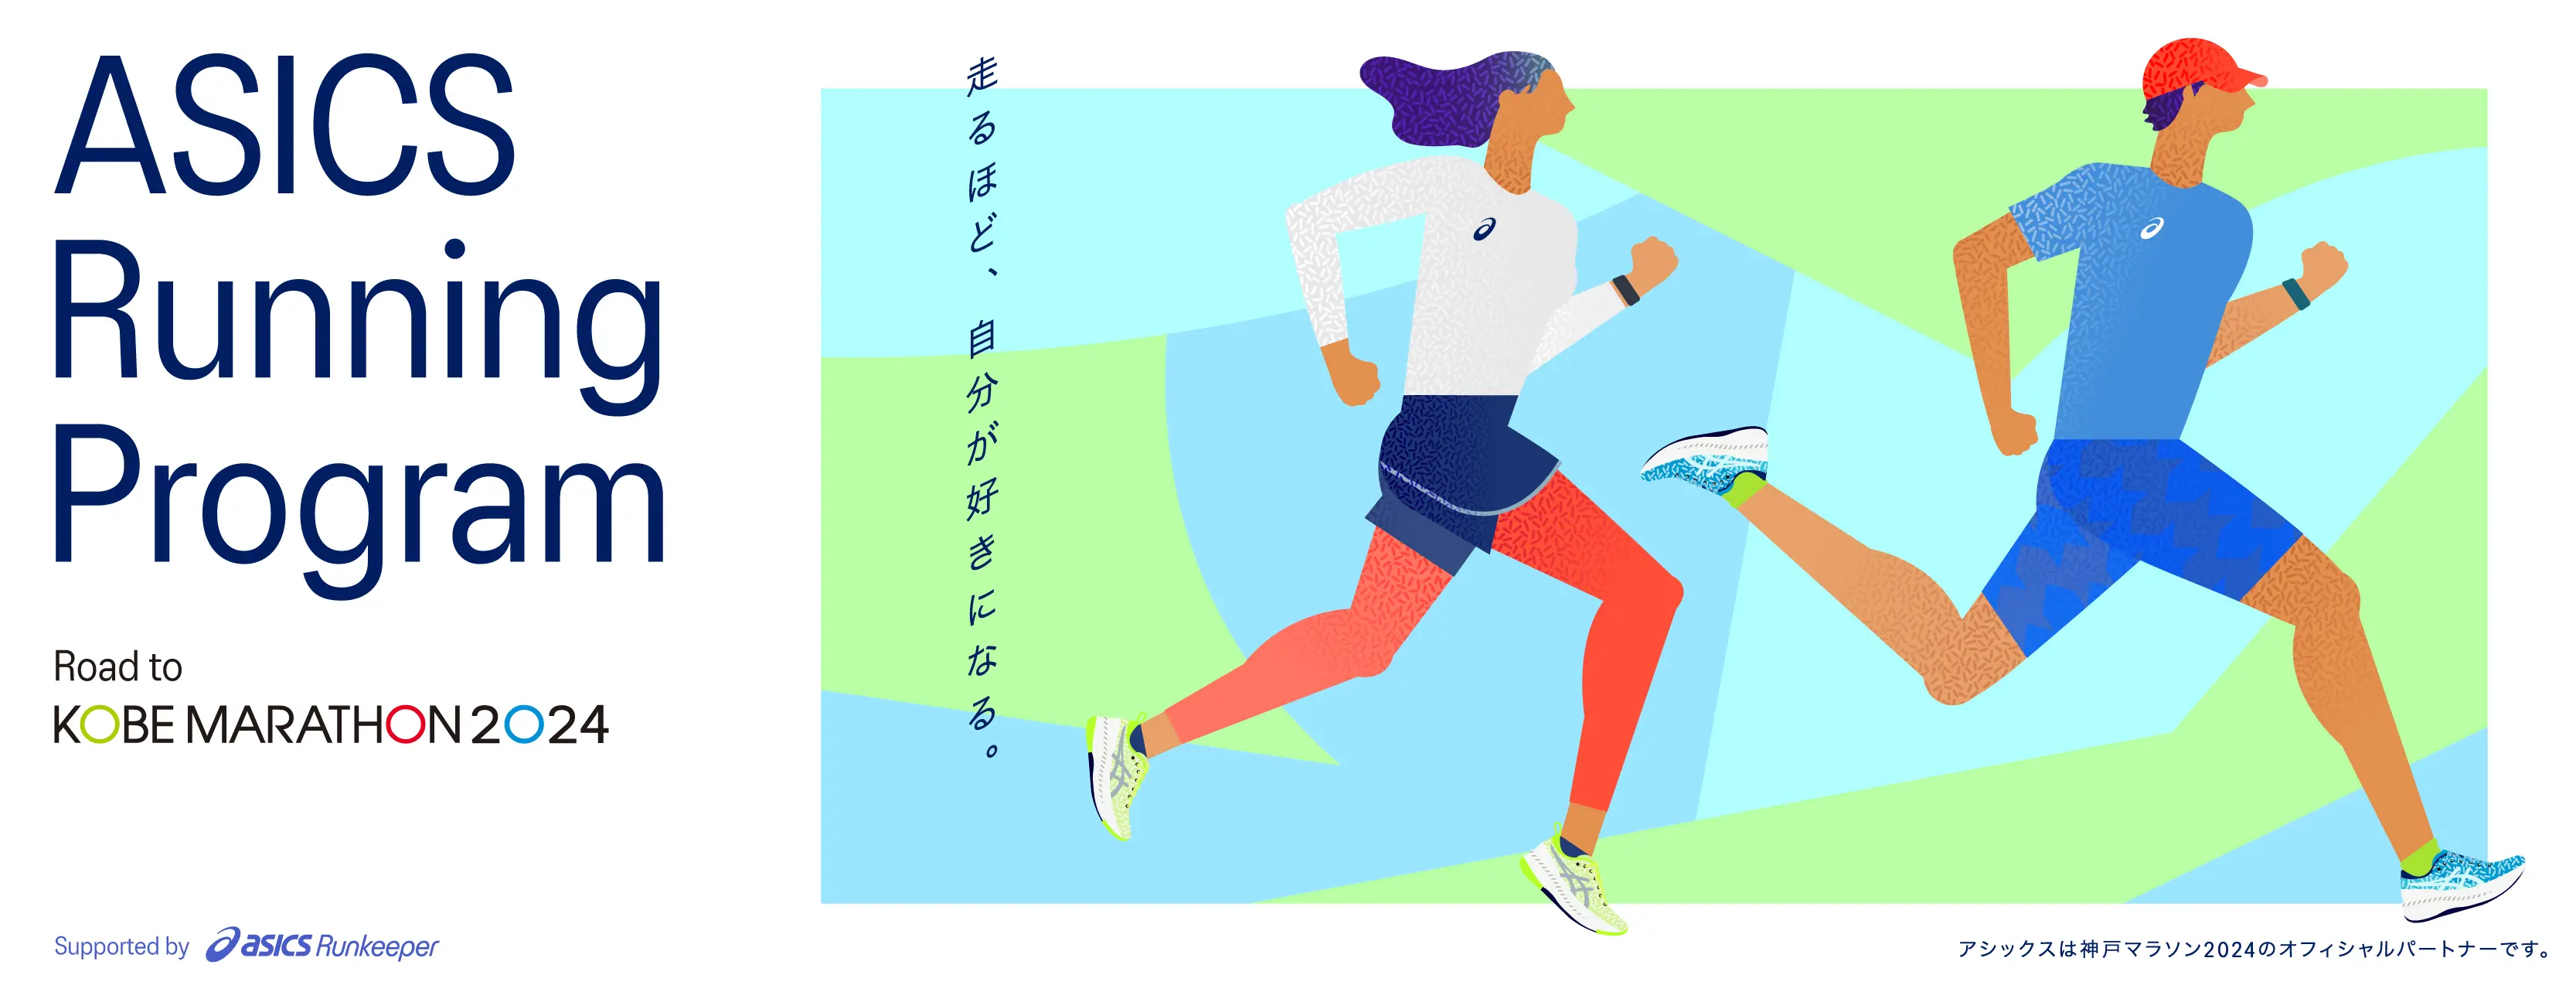 ASICS Running Program Road to 神戸マラソン2024